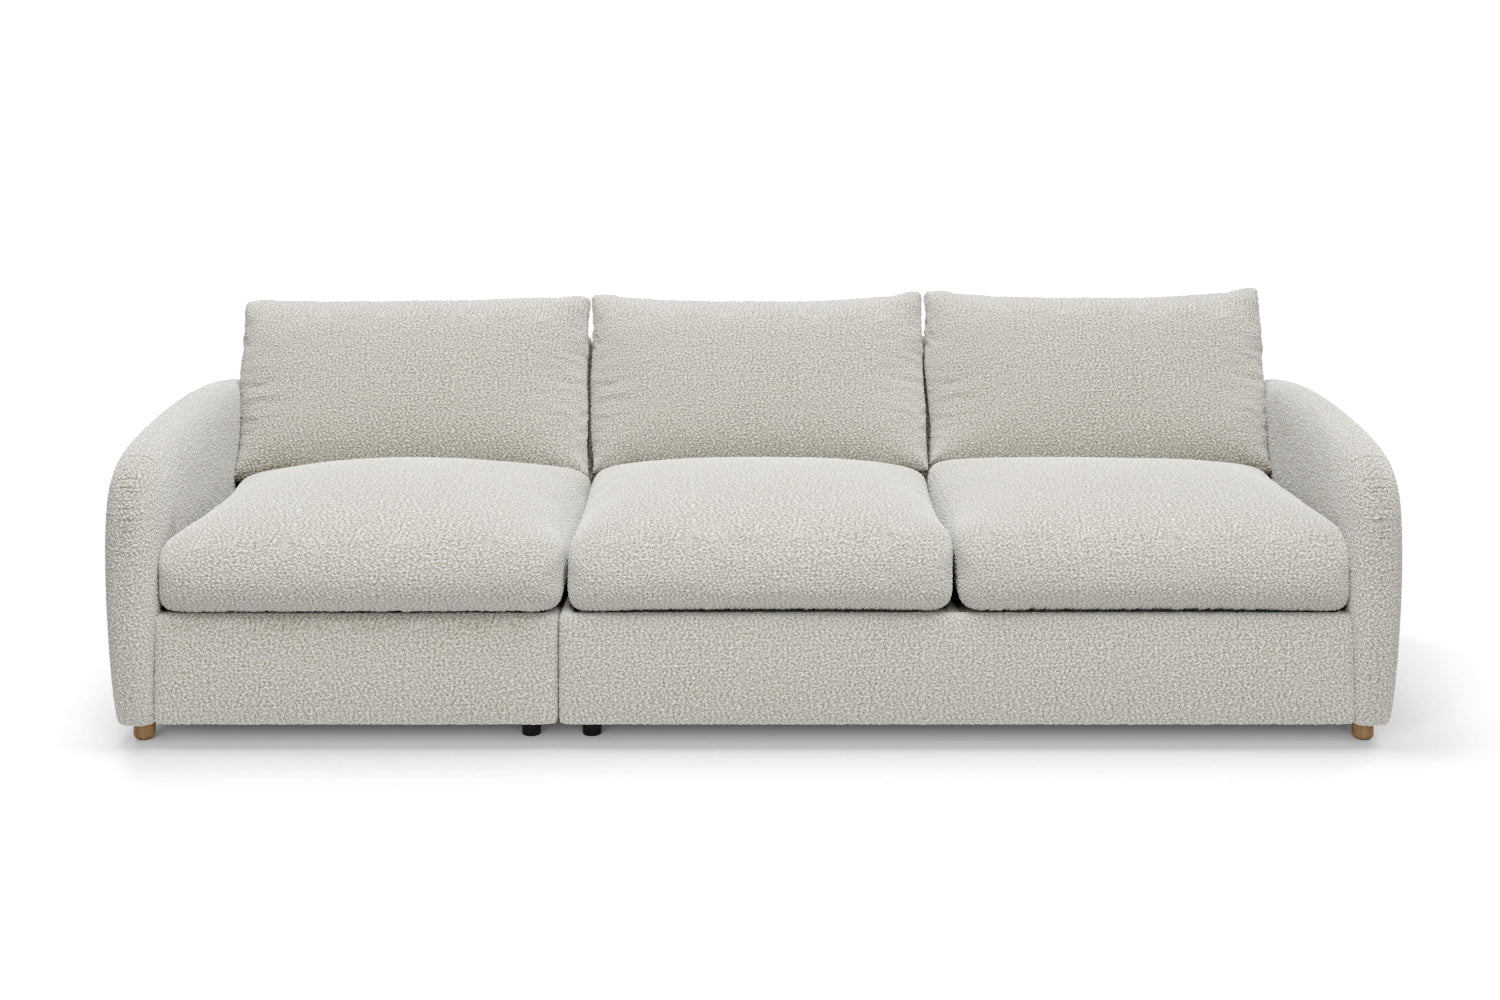 The Small Biggie - 4.5 Seater Sofa - Fuzzy White Boucle